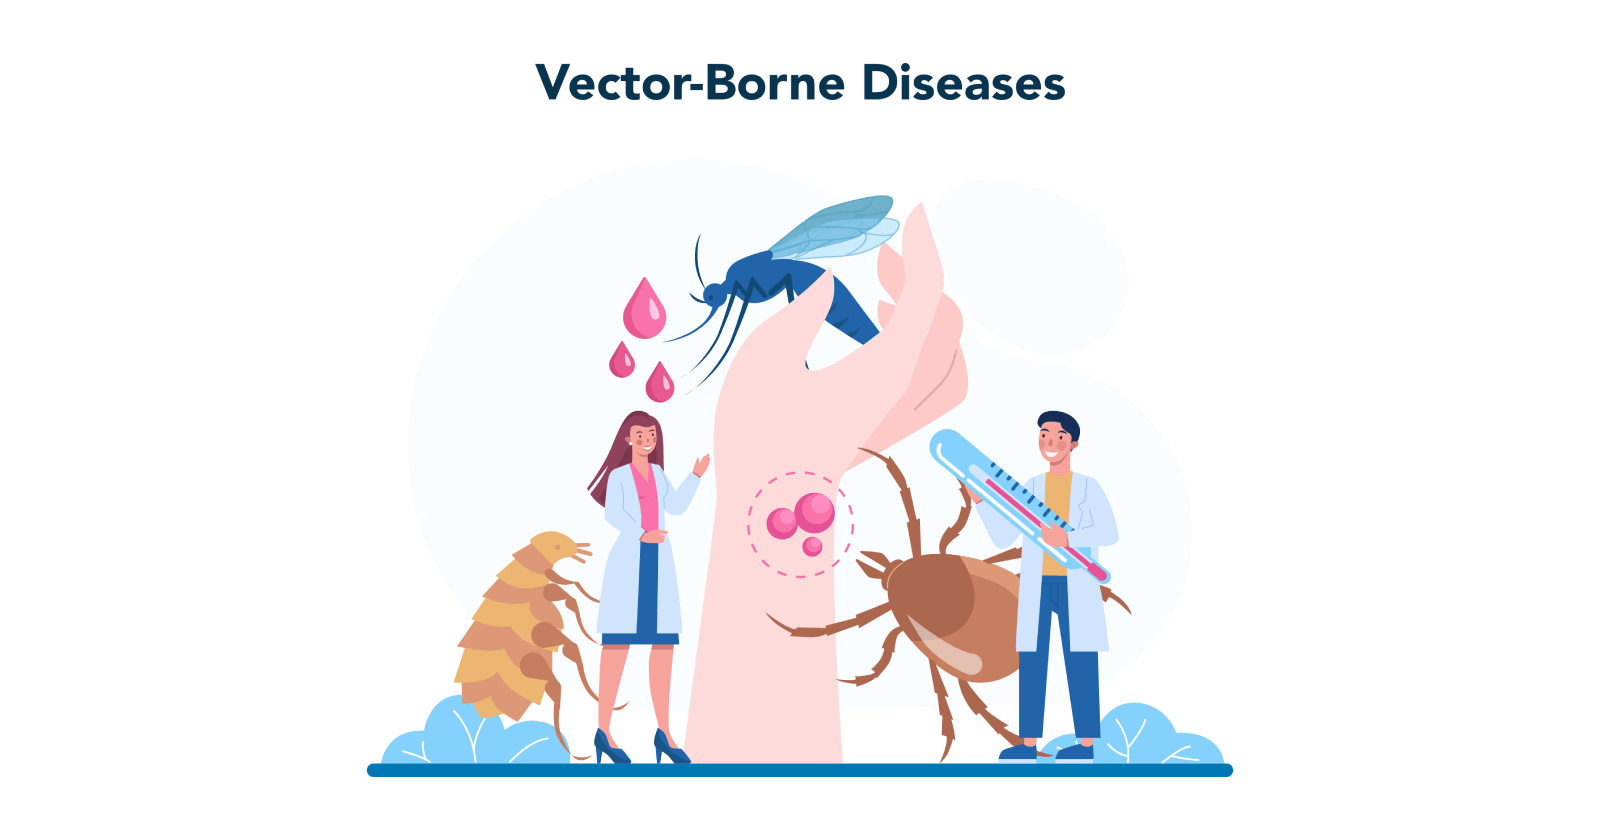 borne diseases presentation